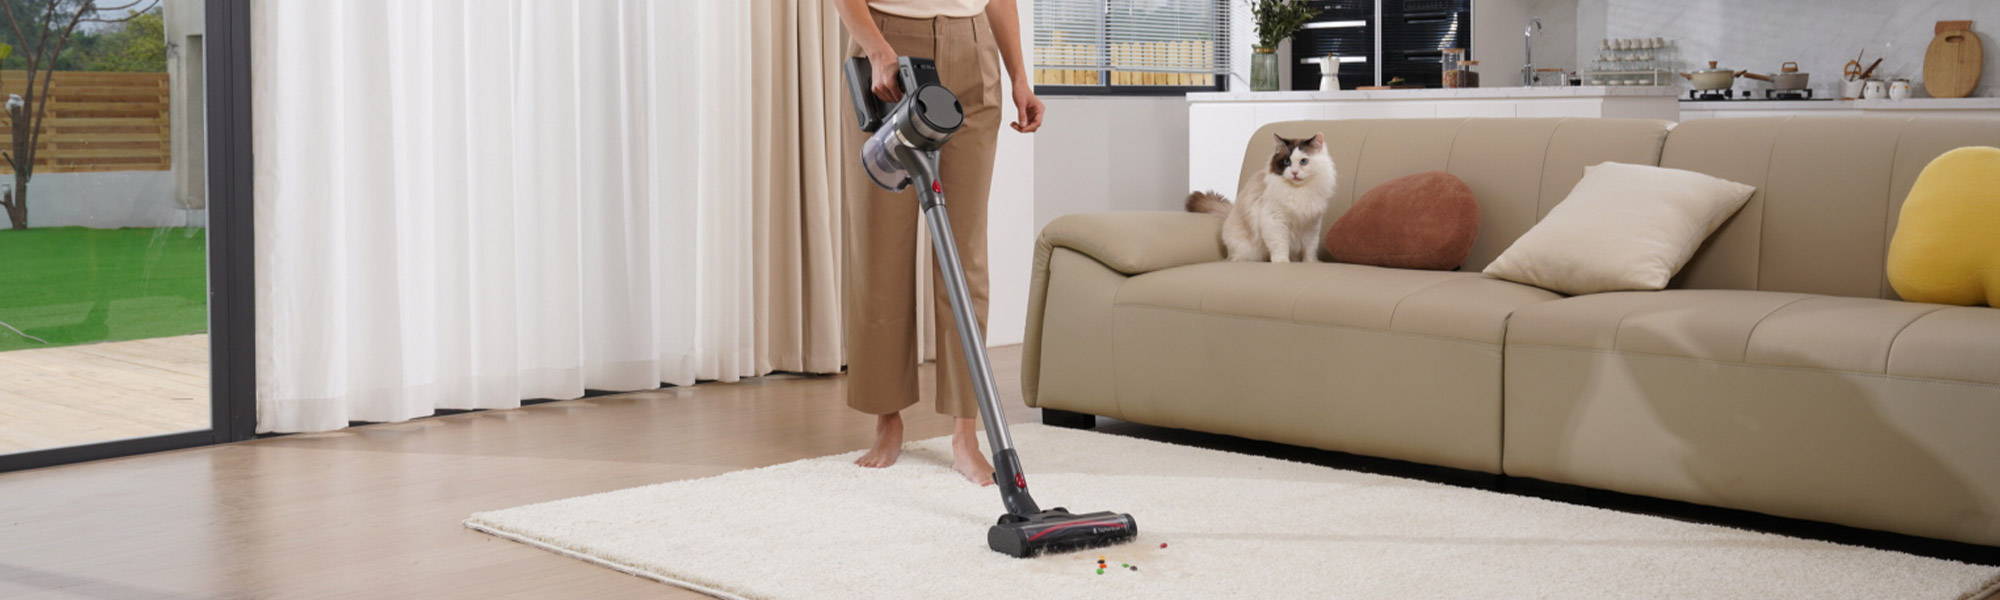 Faqs For Maircle S3 Cordless Pet Vacuum